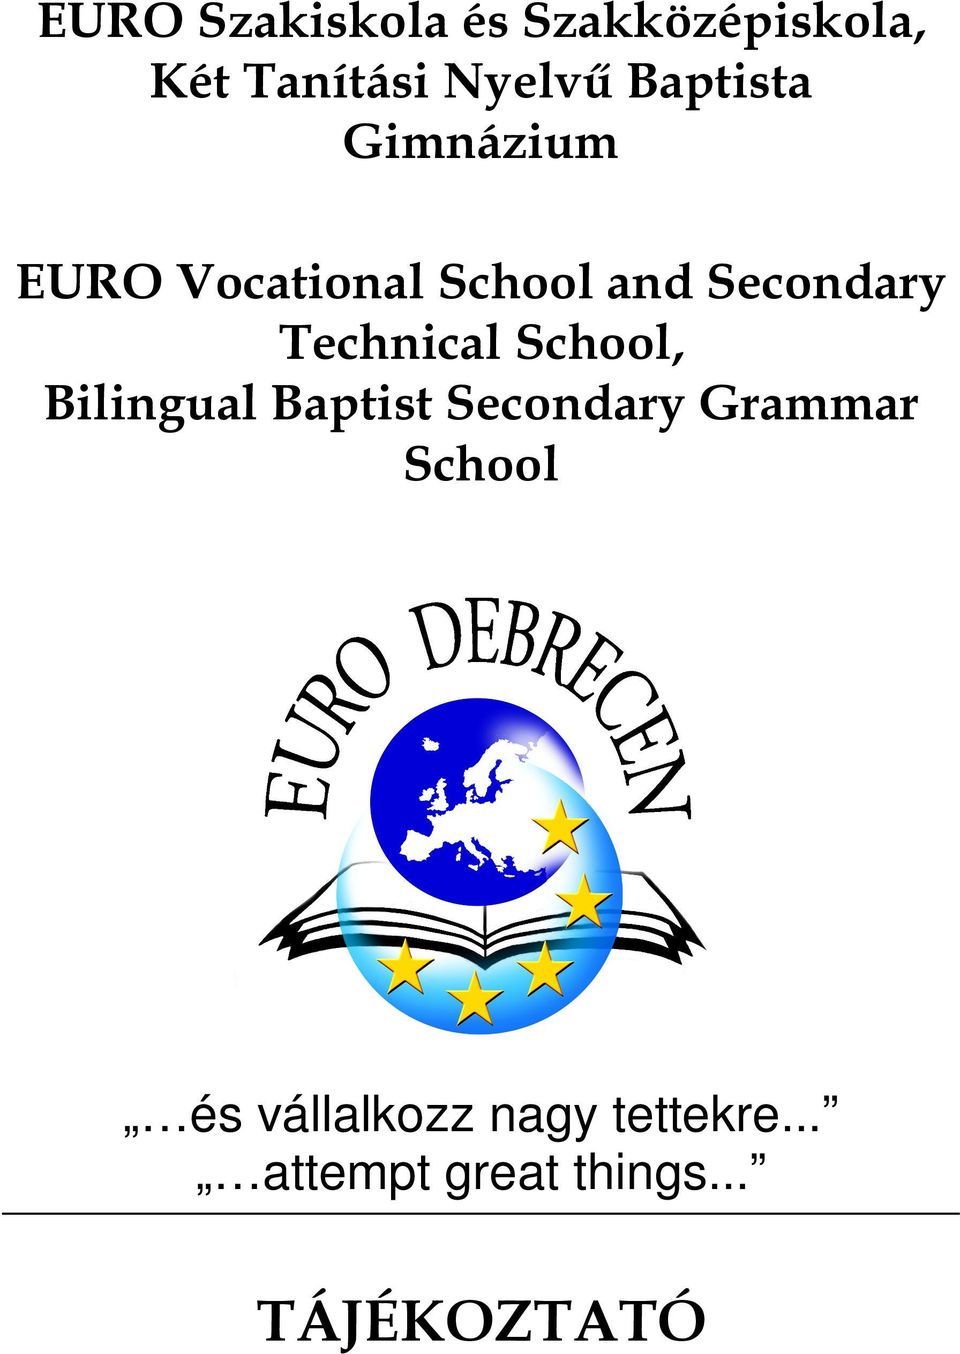 Technical School, Bilingual Baptist Secondary Grammar